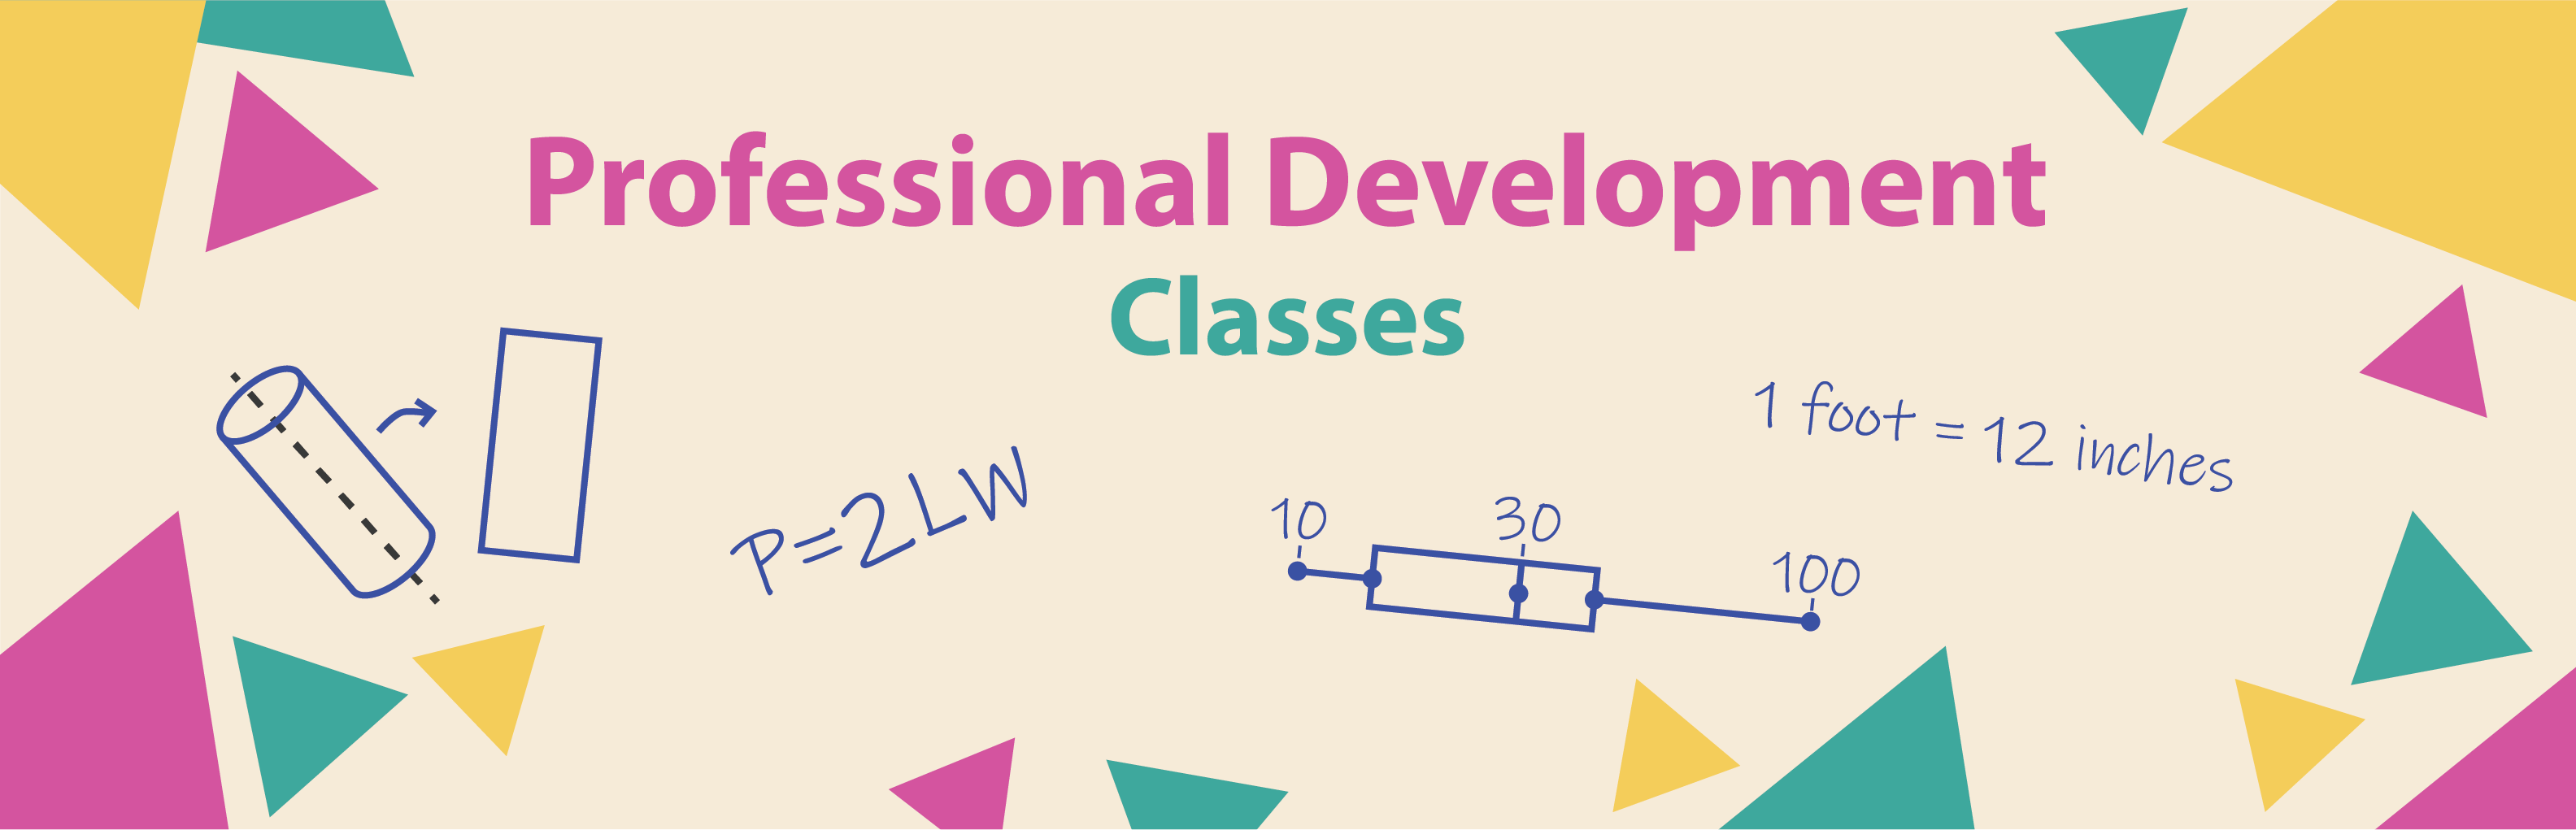 Professional Development Classes